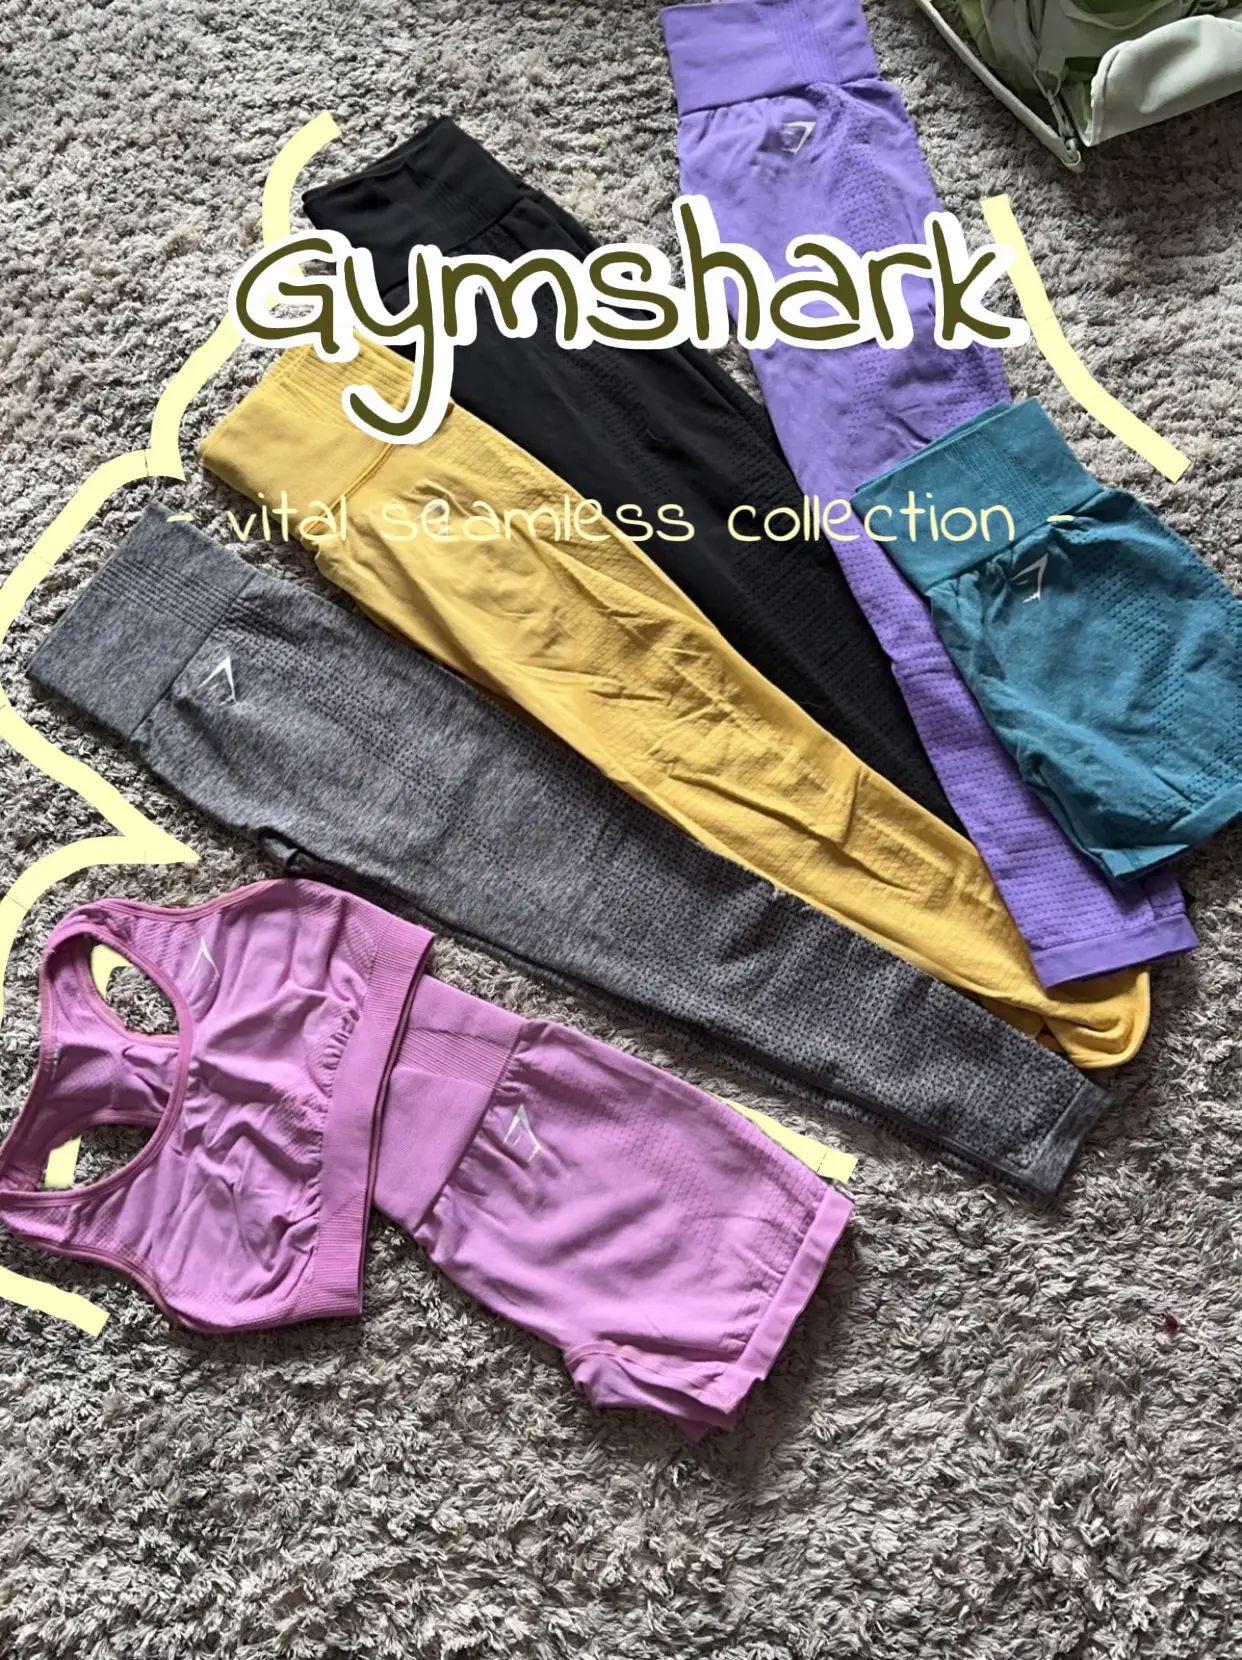 Gymshark - New Vital colours. Coming soon 👀 #Gymshark